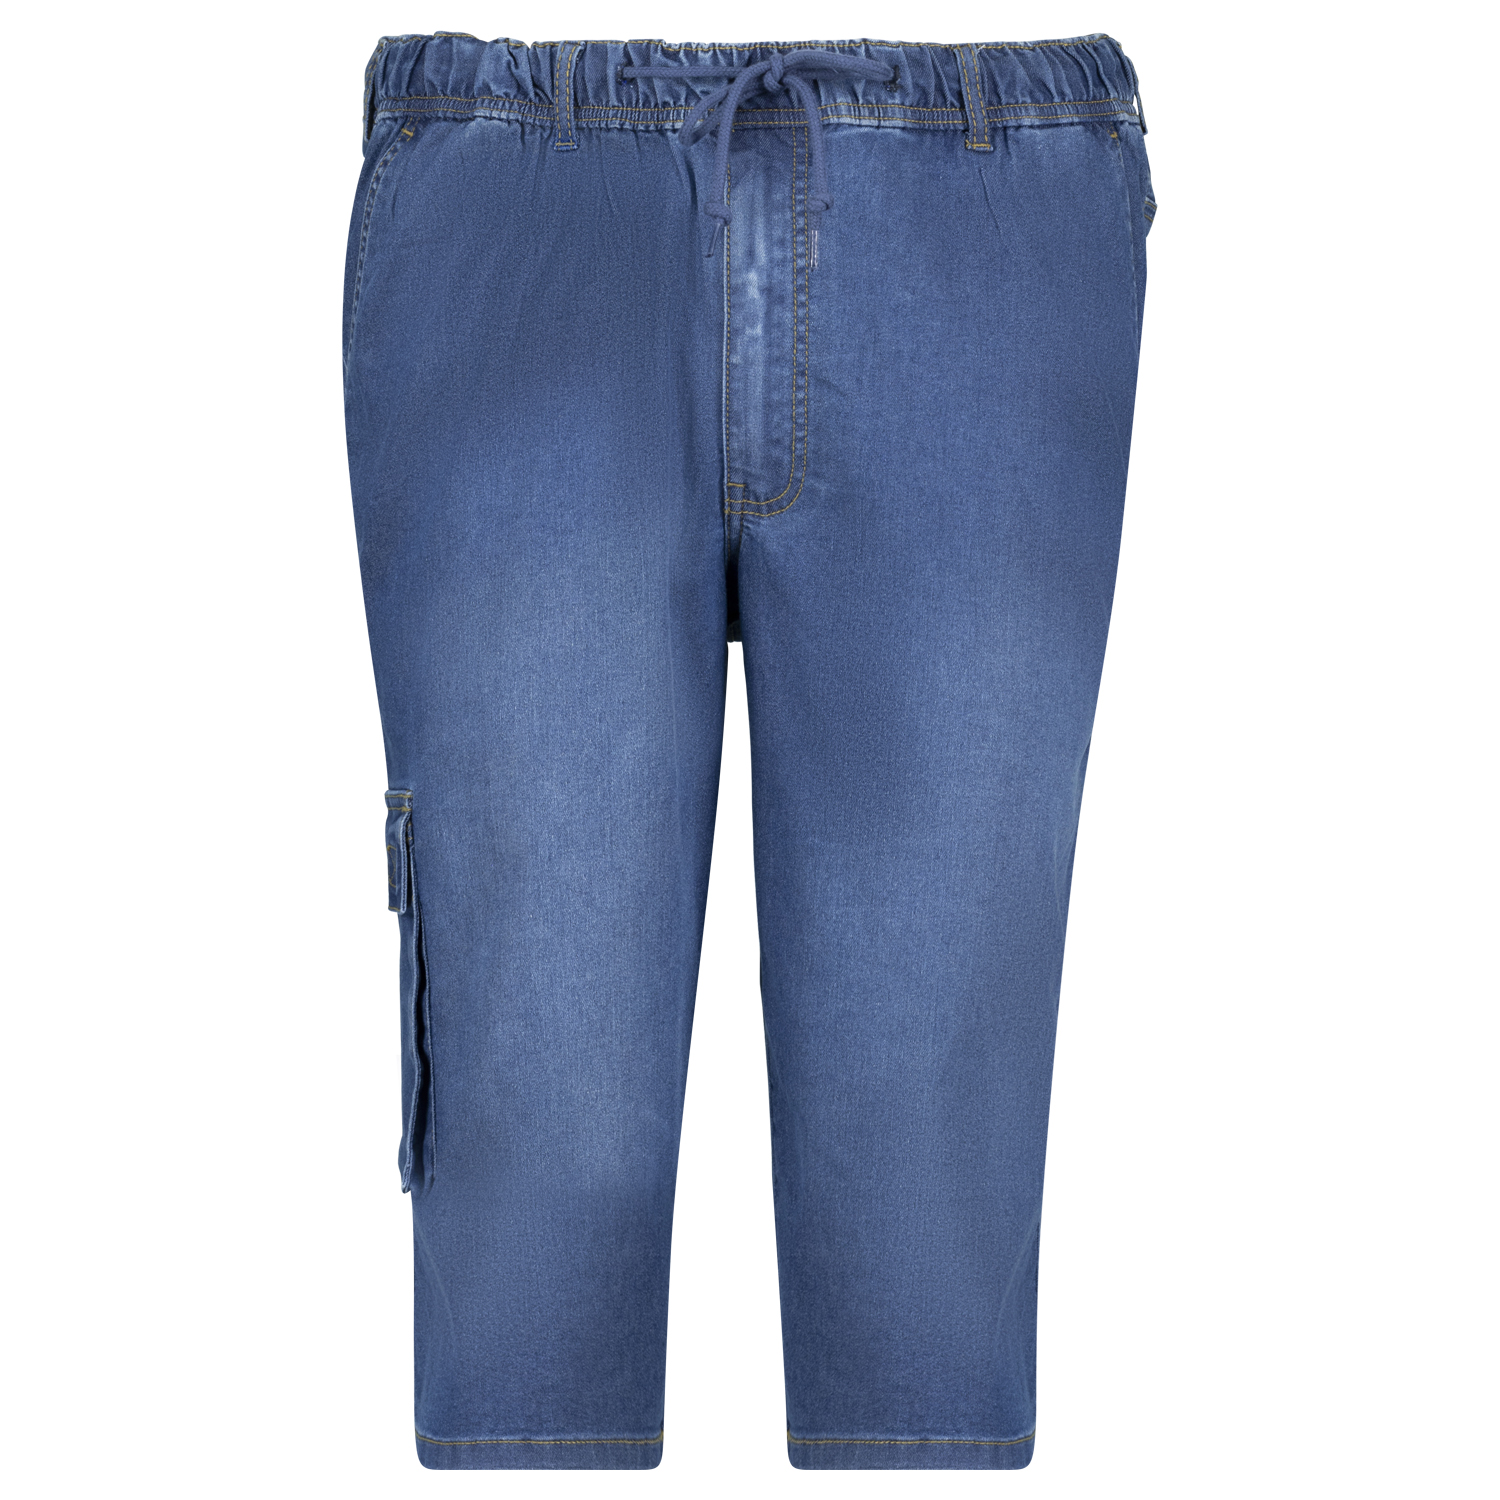 Jeans sweatpants capri in medium blue for men by Adamo series "Dallas" in oversizes up to 12XL